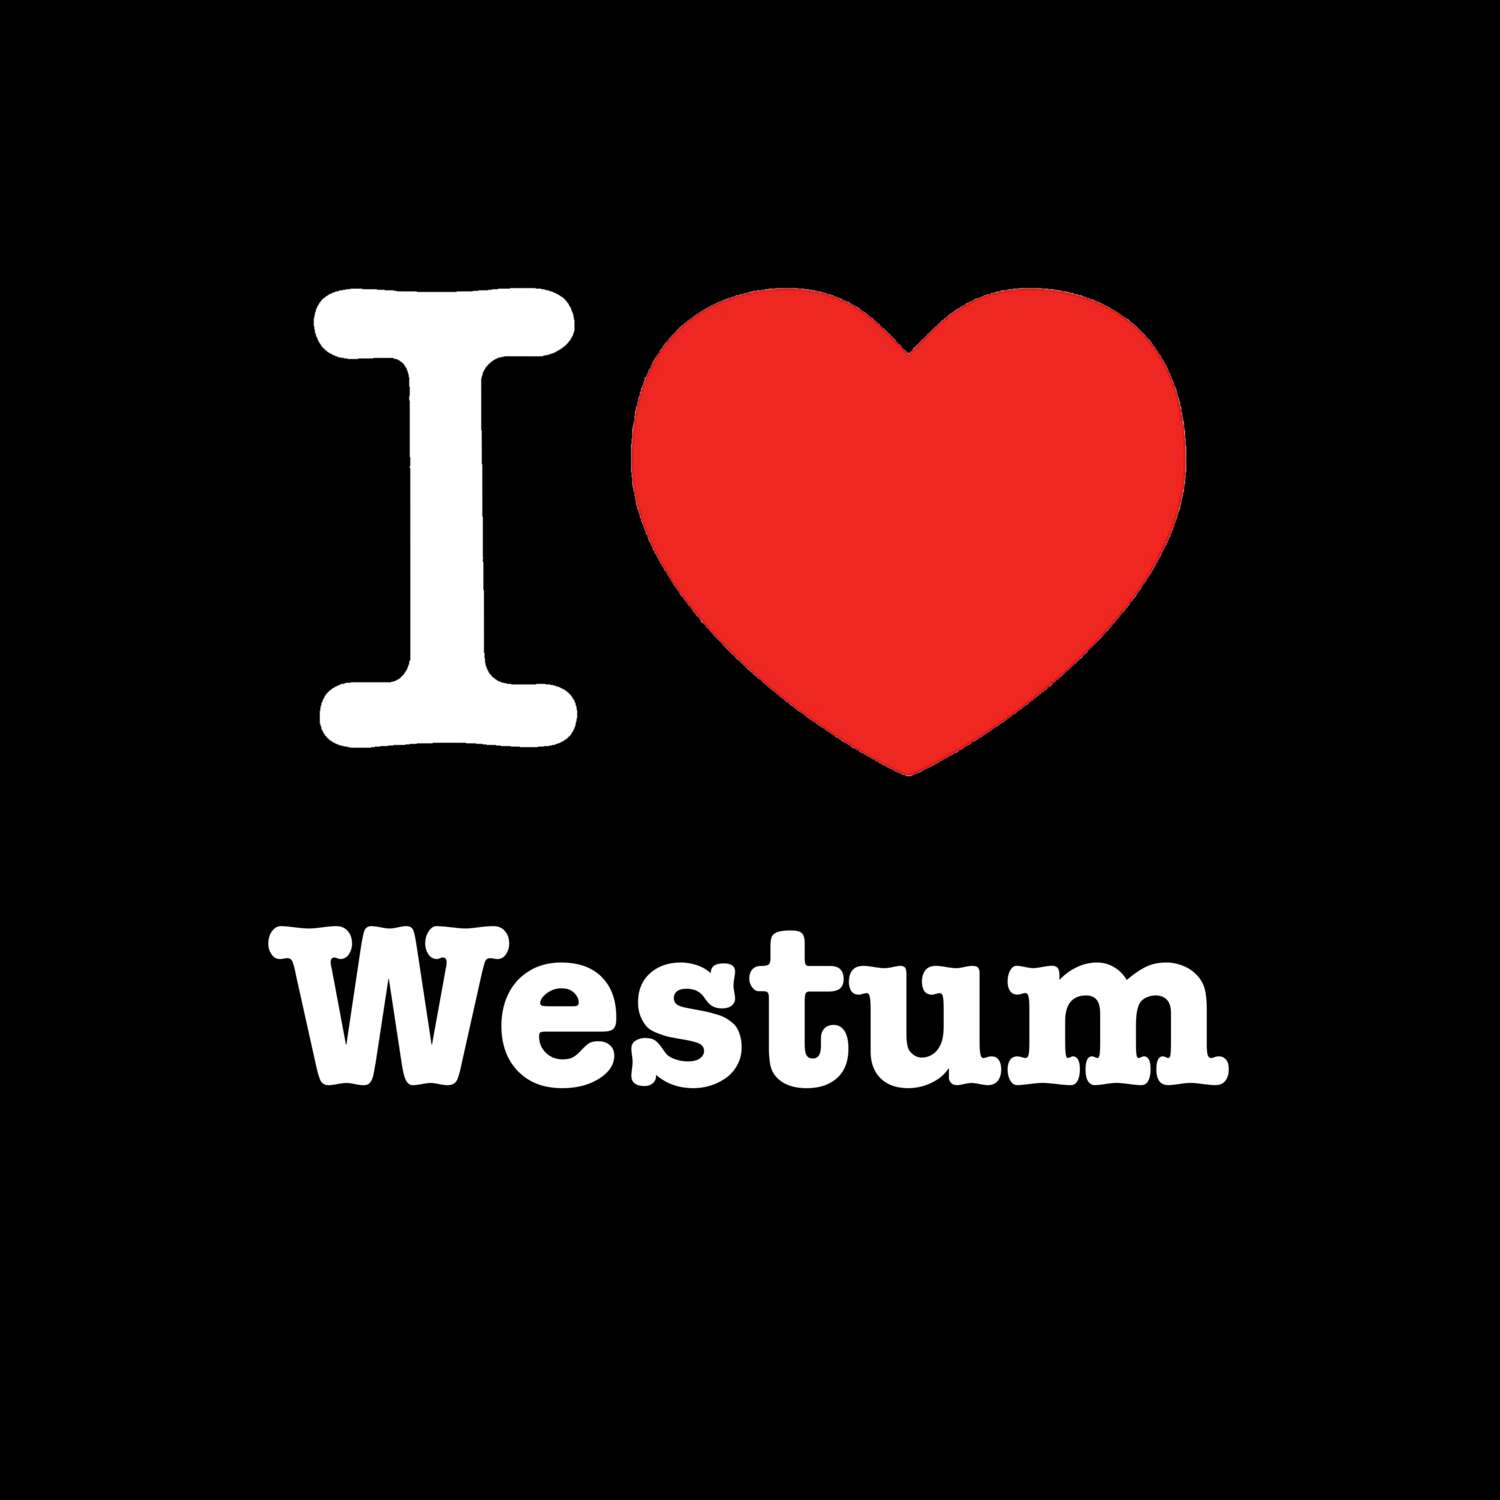 Westum T-Shirt »I love«